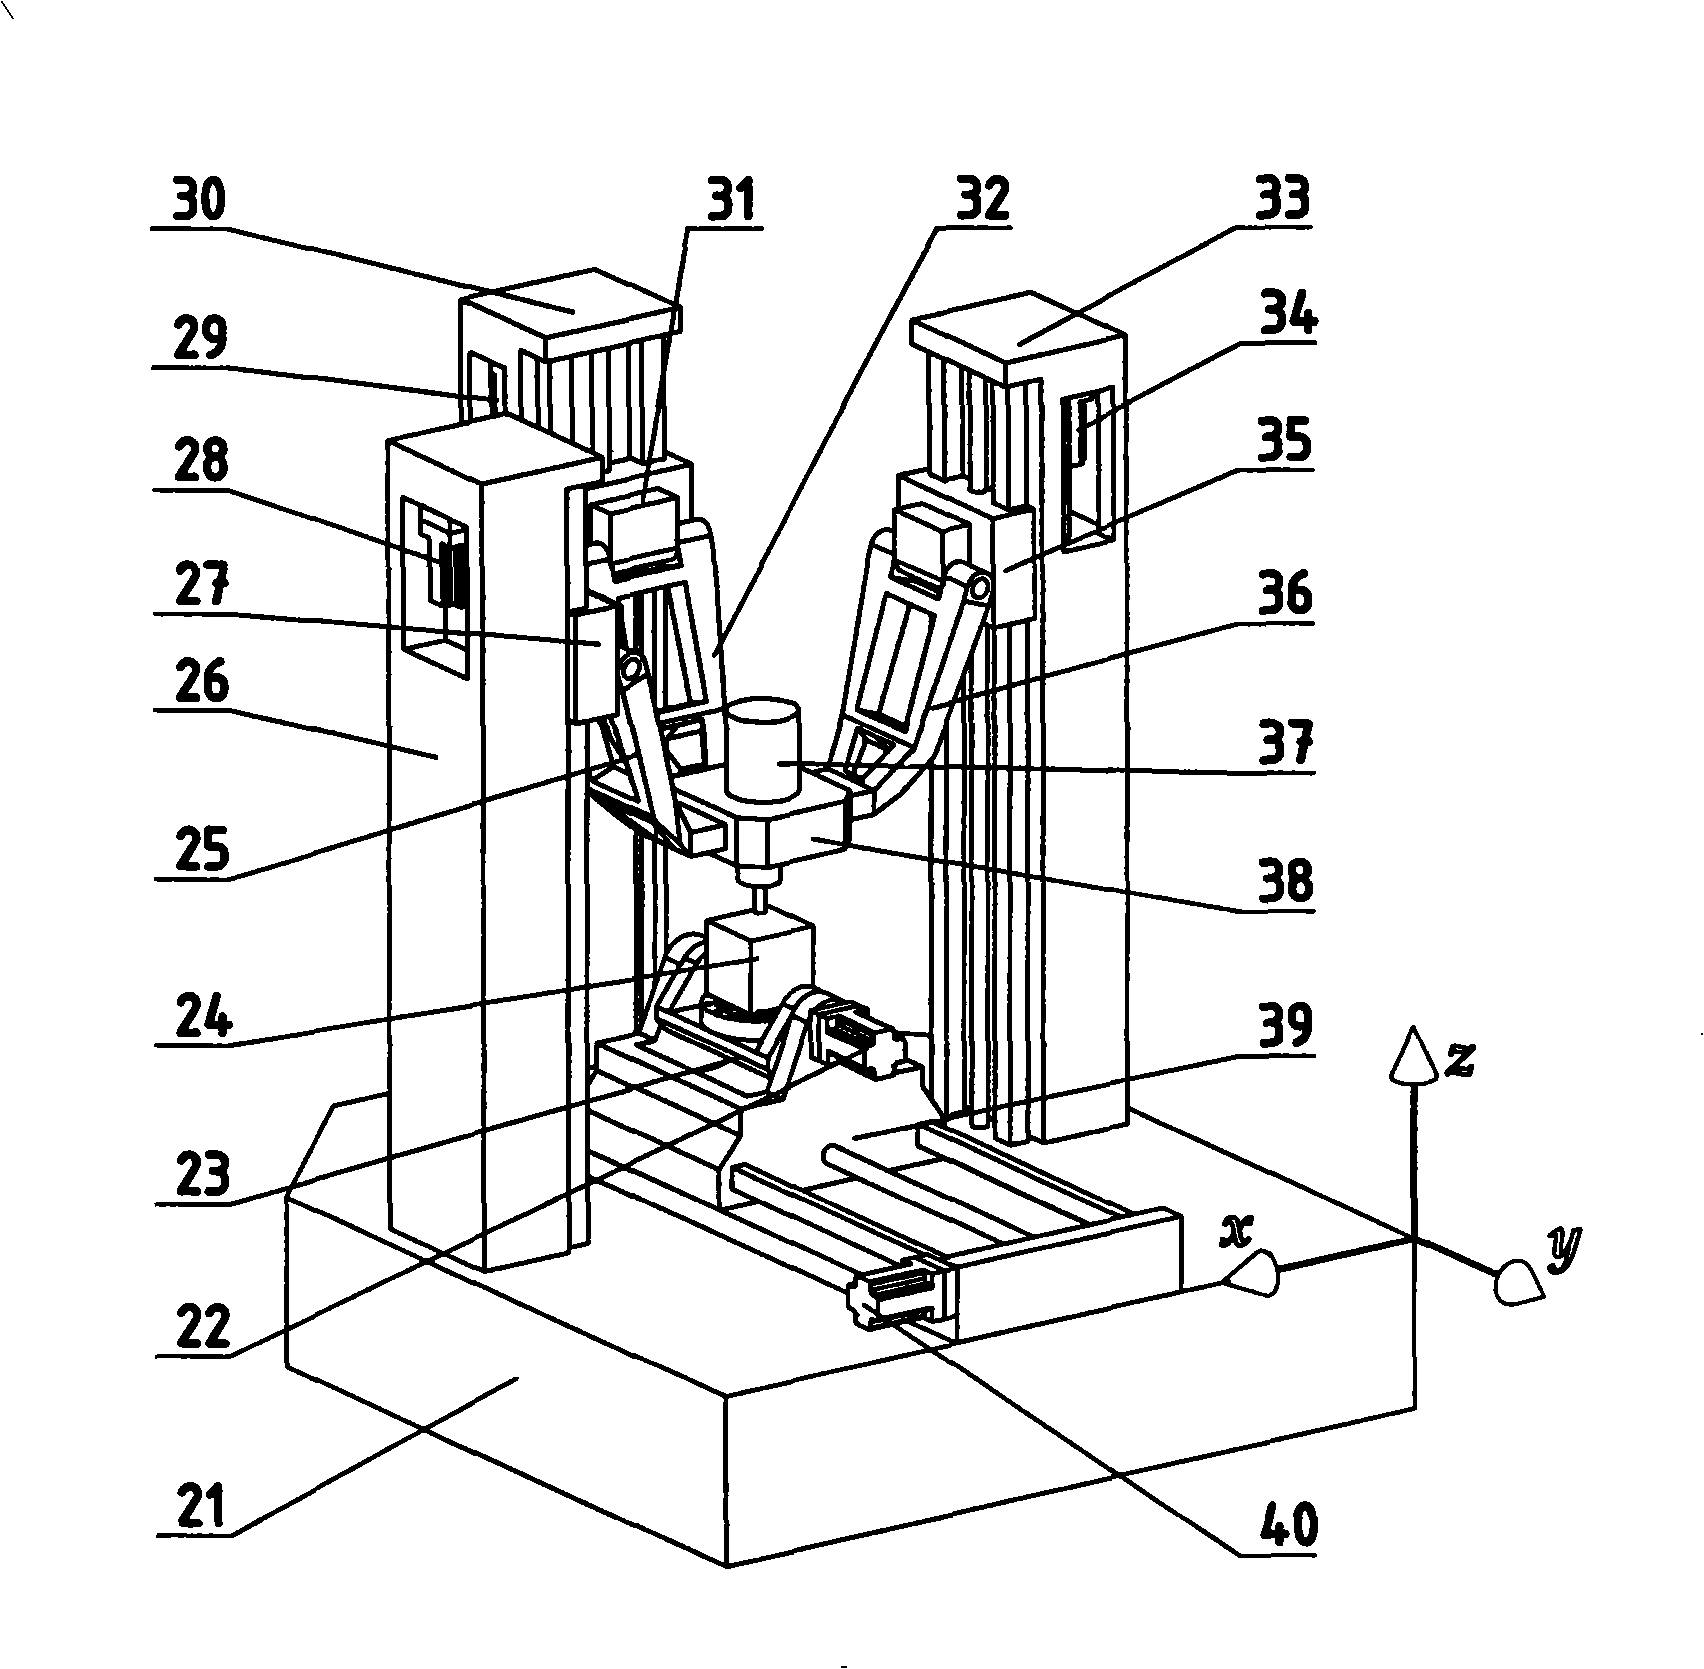 Multi-shaft linkage series-parallel machine tool